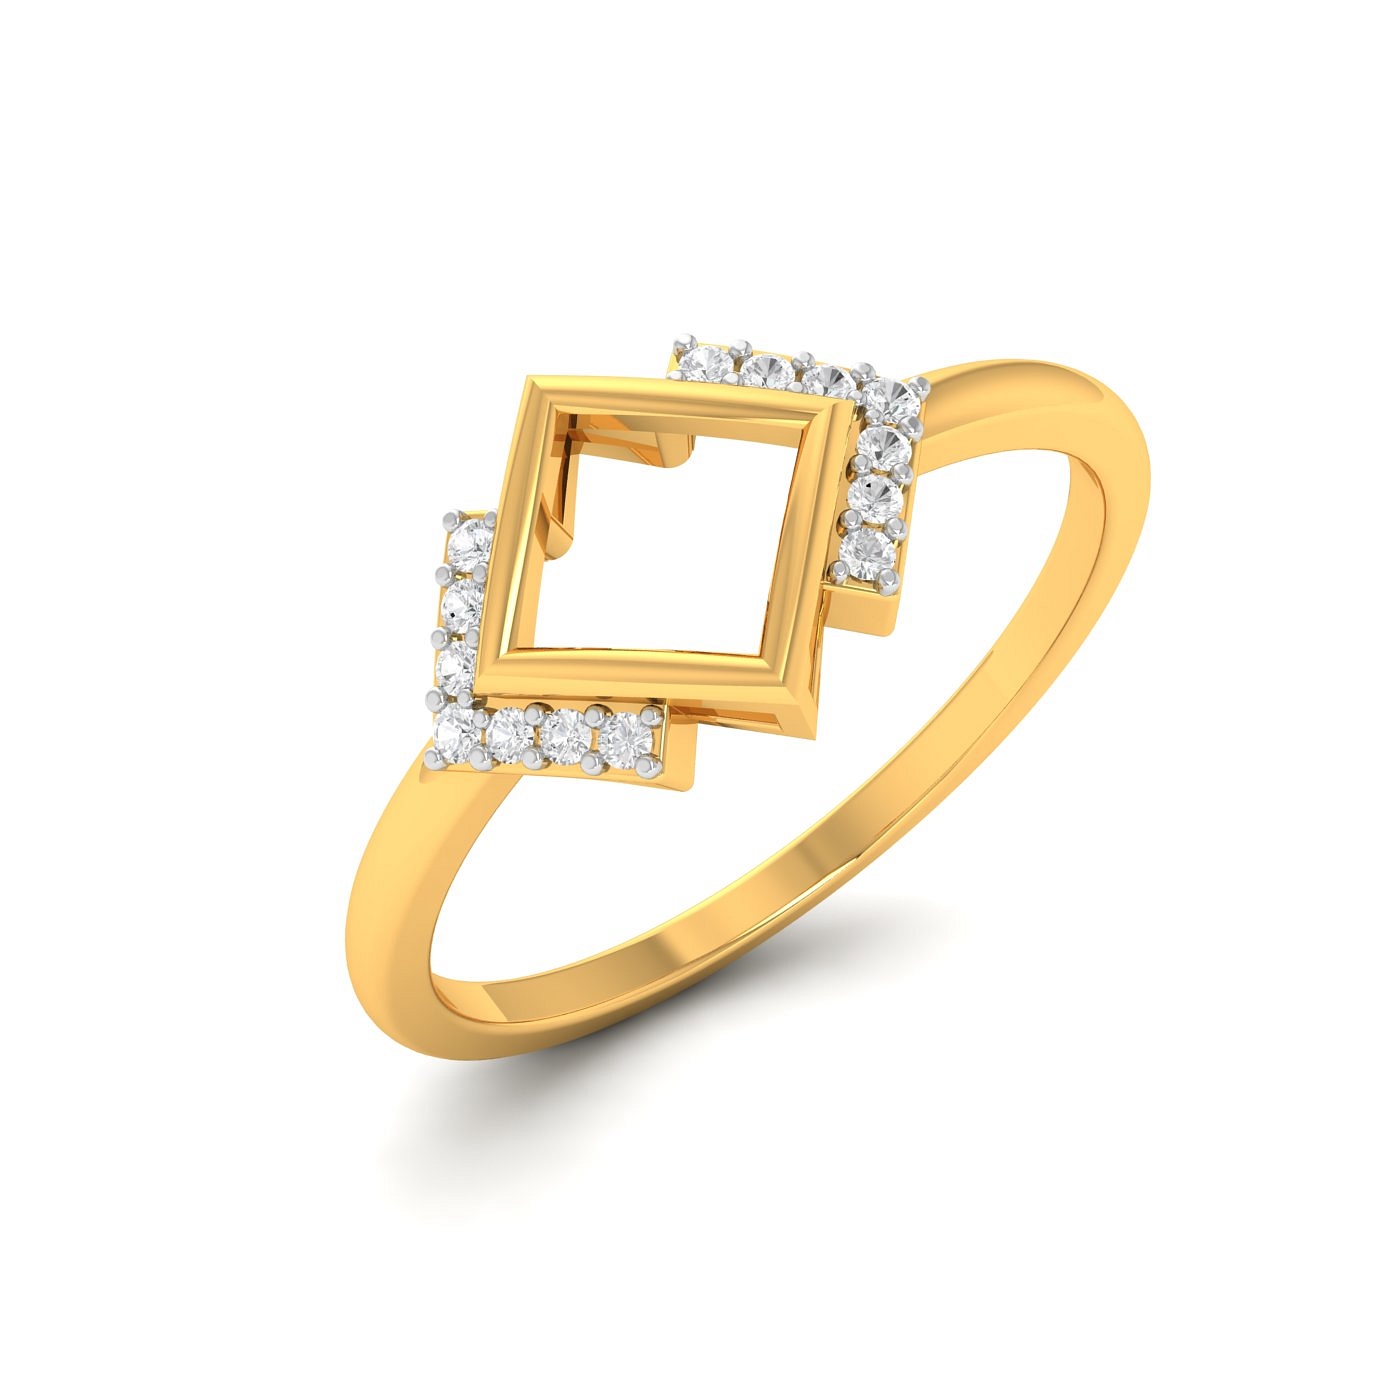 || Aquilone Diamond Ring || Top 10 Best Diamond Rings For Women under 20000 ||